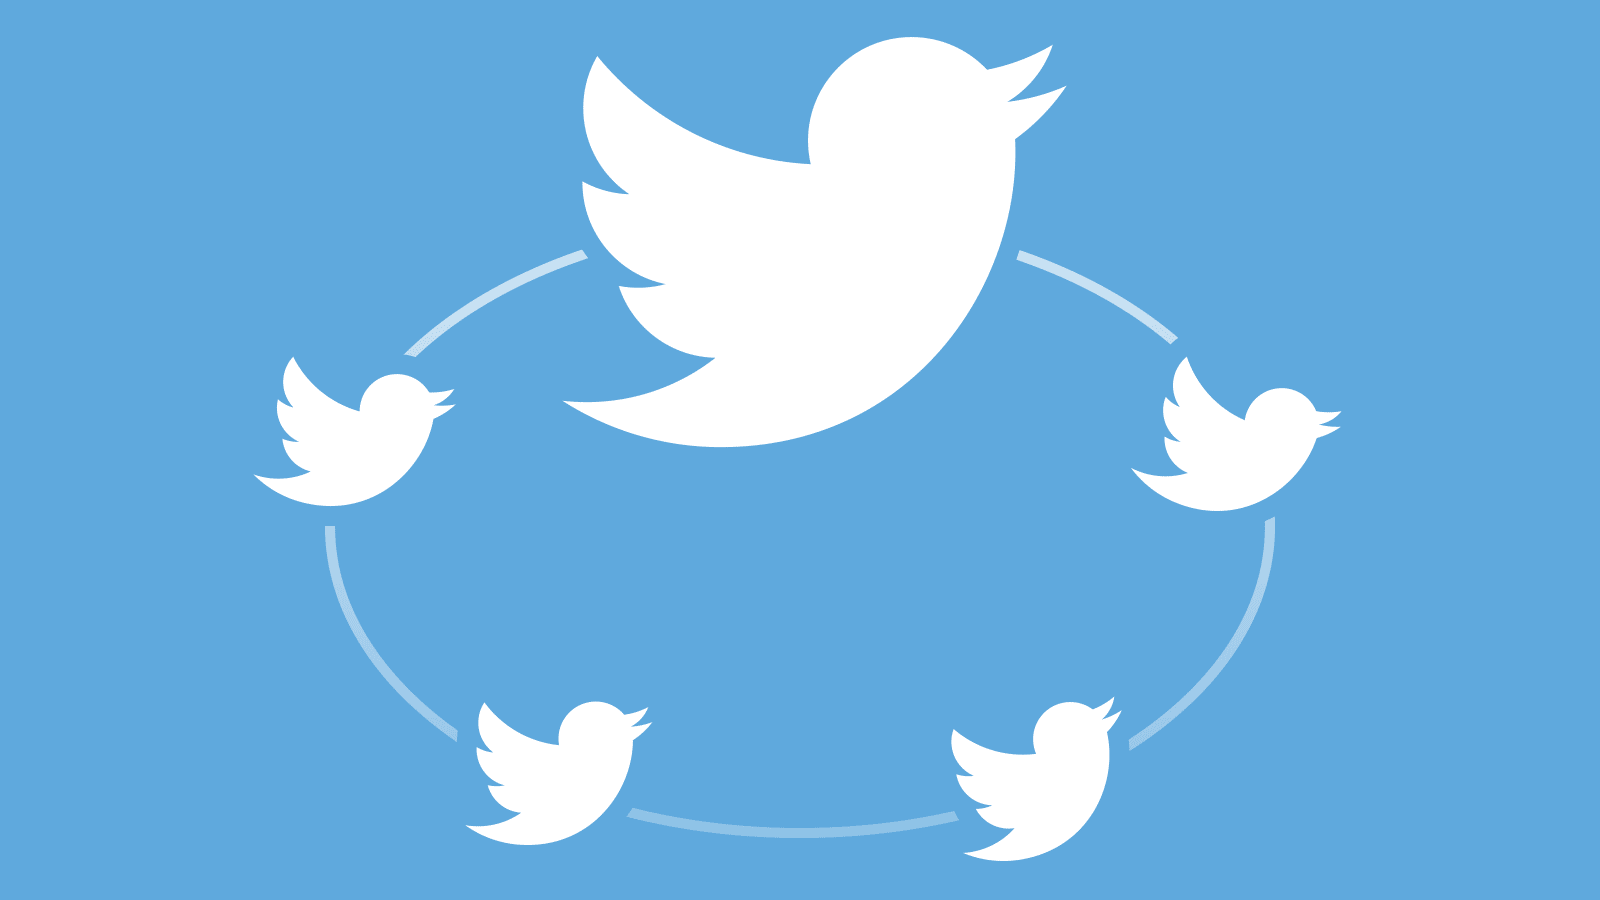 Twitter animations. Твиттер. Логотип twitter. Твиттер картинки. Картинки для твиттера.